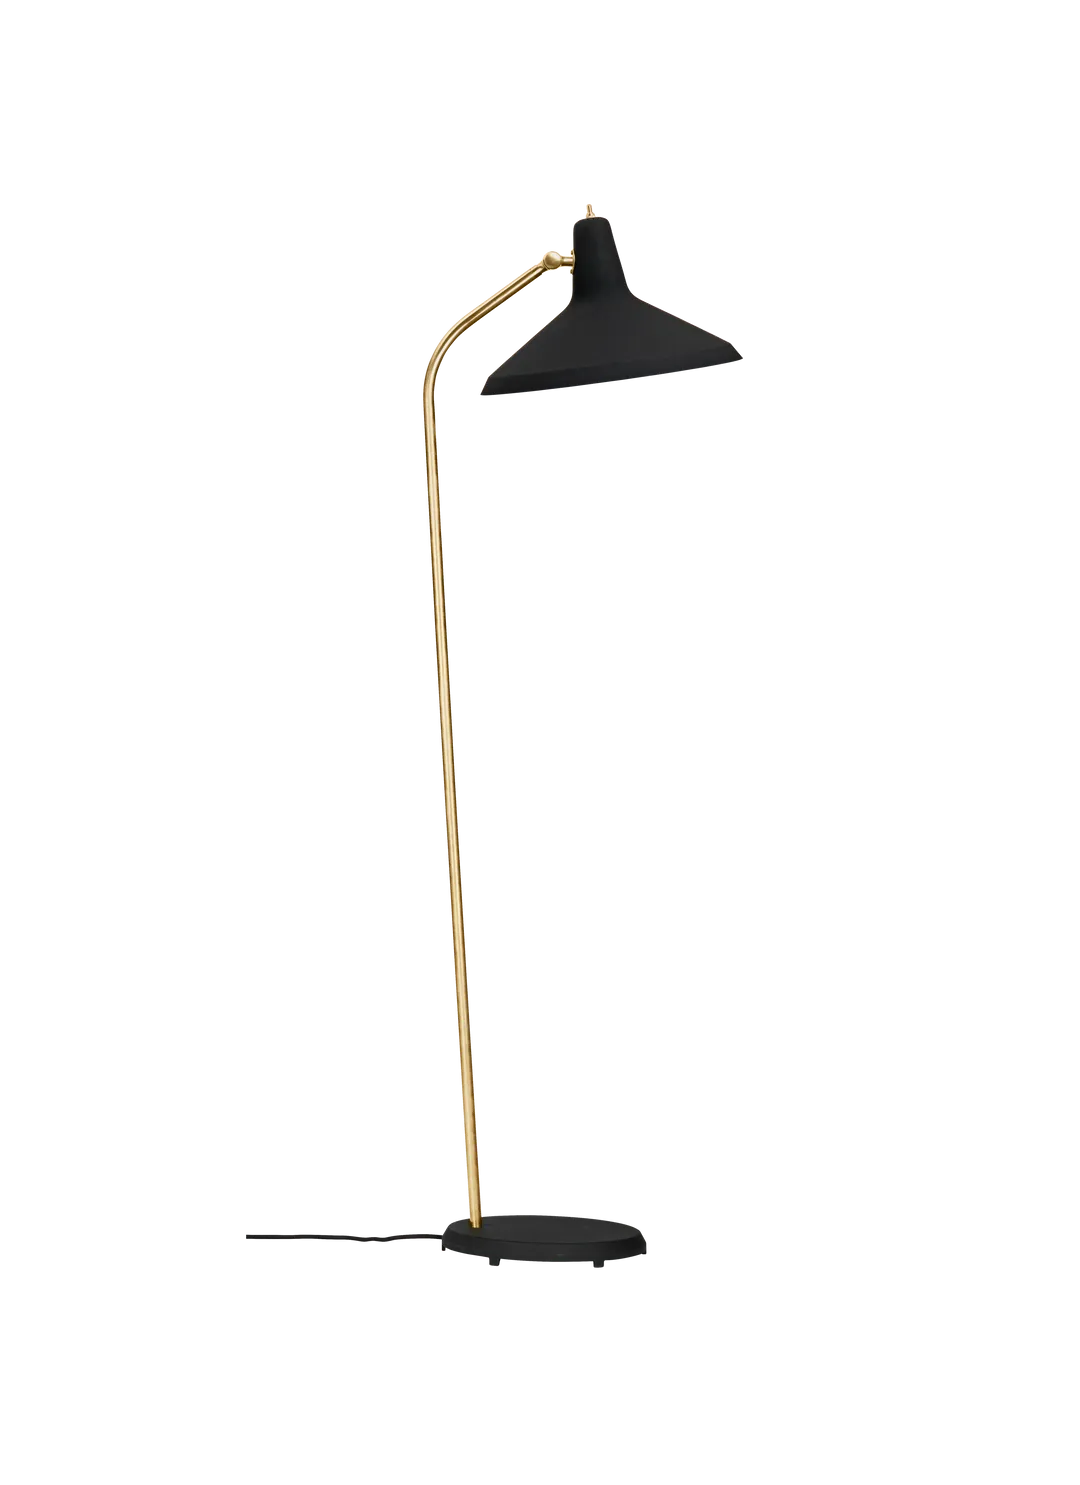 Greta Grossman G-10 Floor Lamp by Gubi